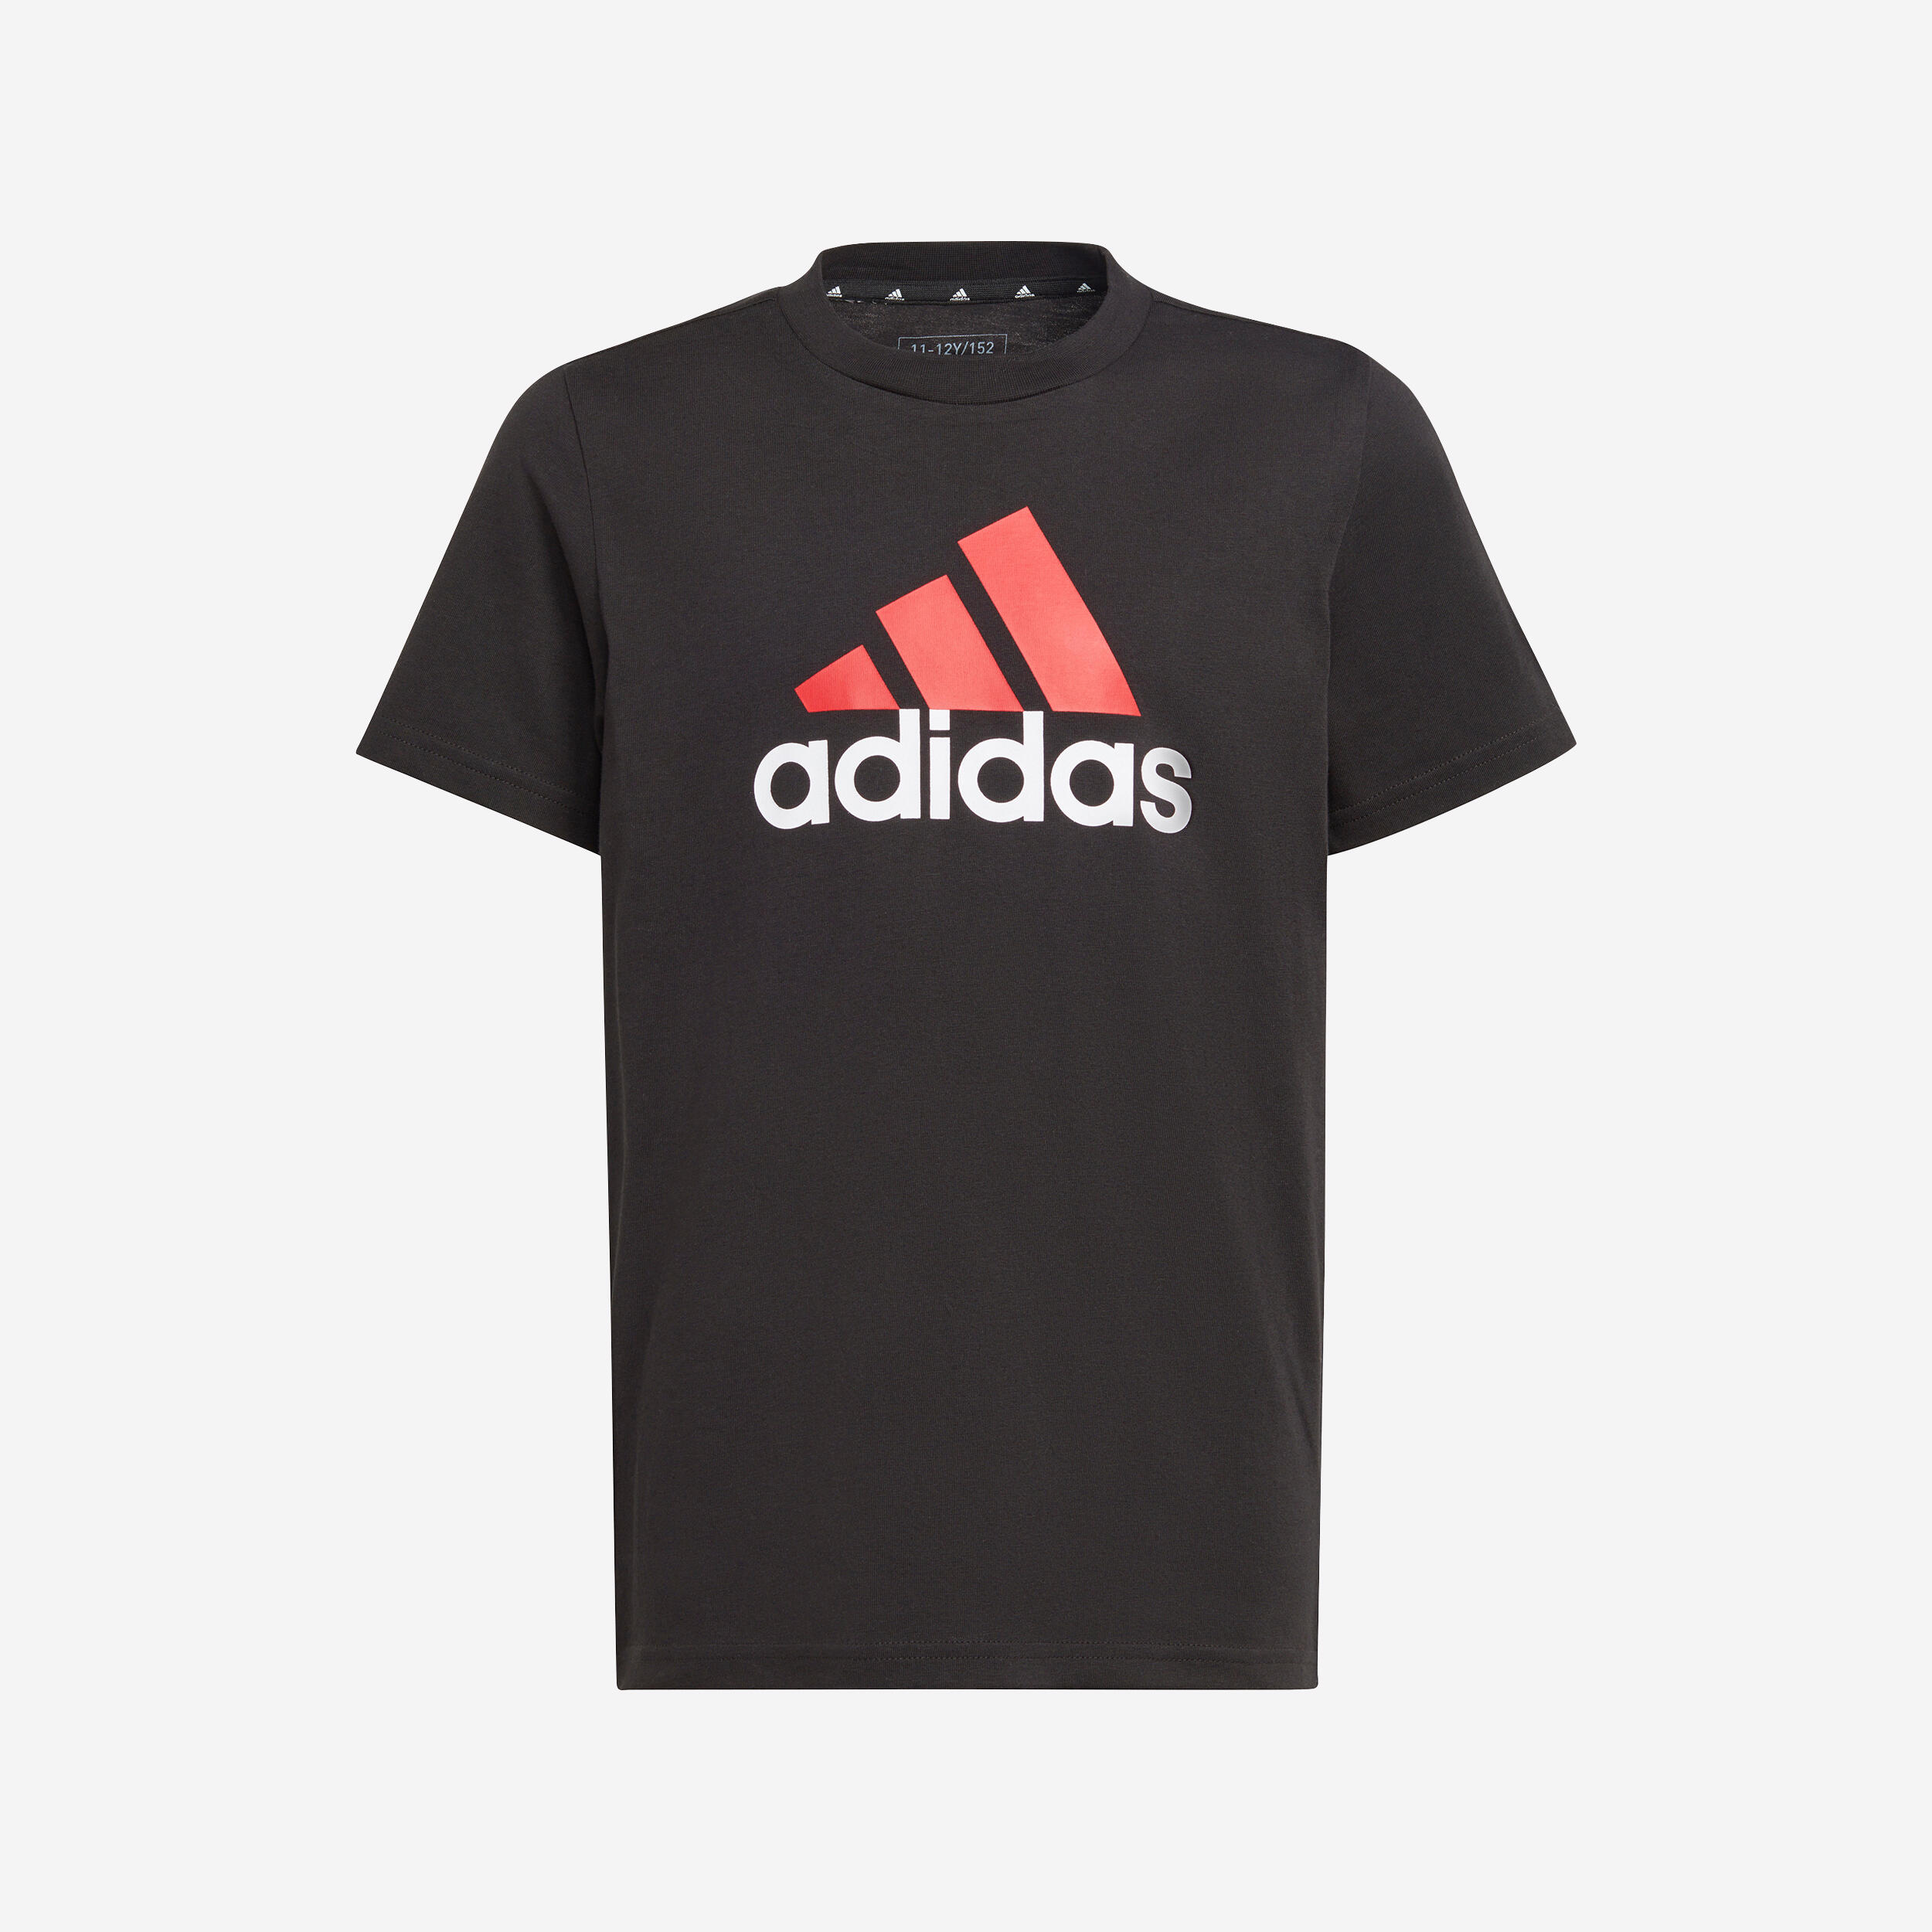 Decathlon | T-shirt bambino ginnastica ADIDAS regular nero-rosso |  Adidas